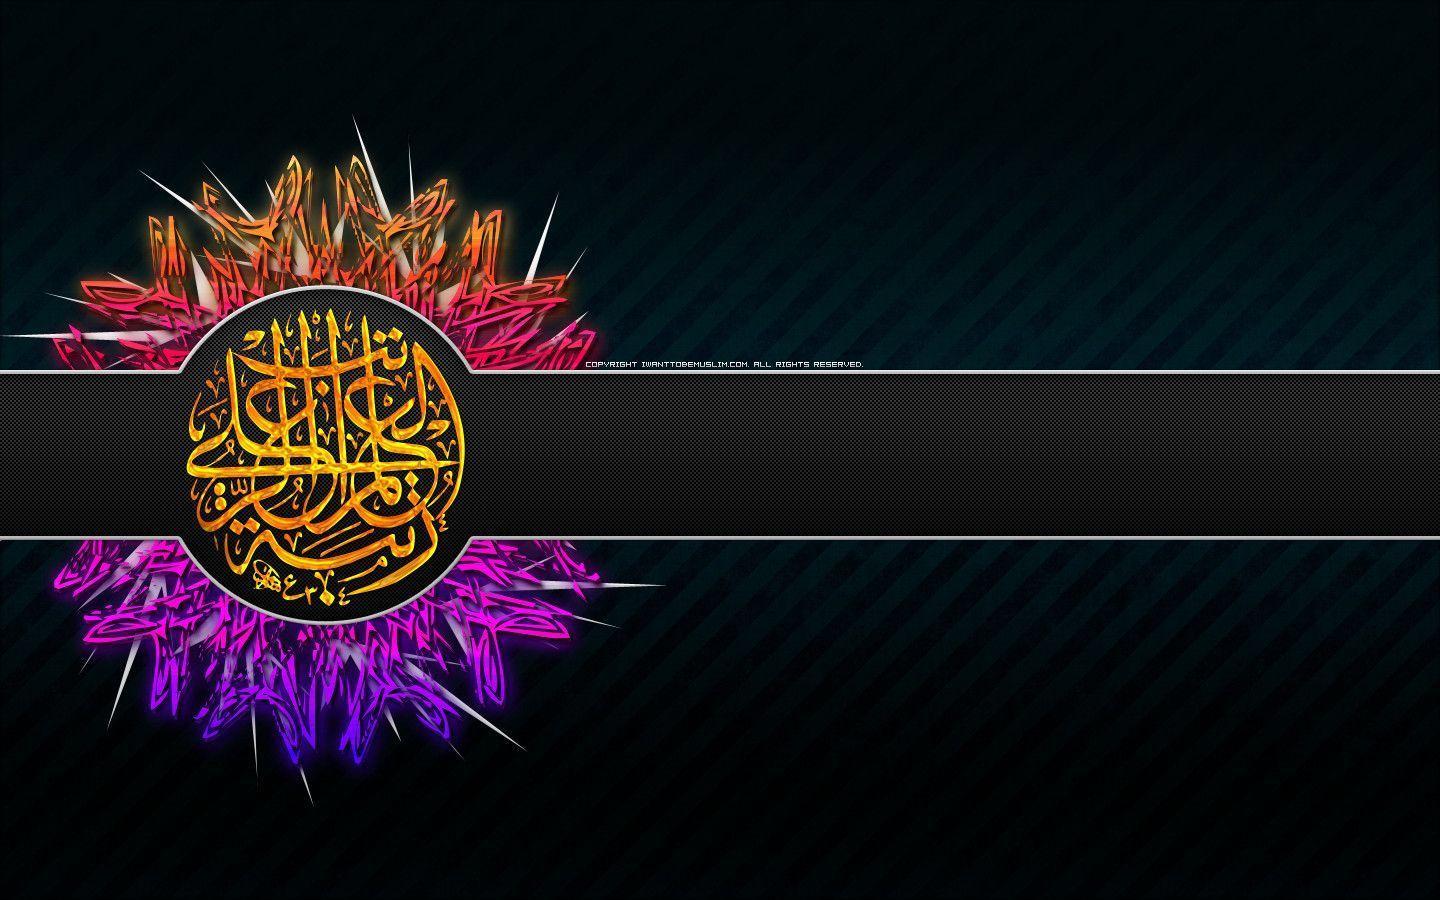 Arabic Wallpaper For Your Desktop